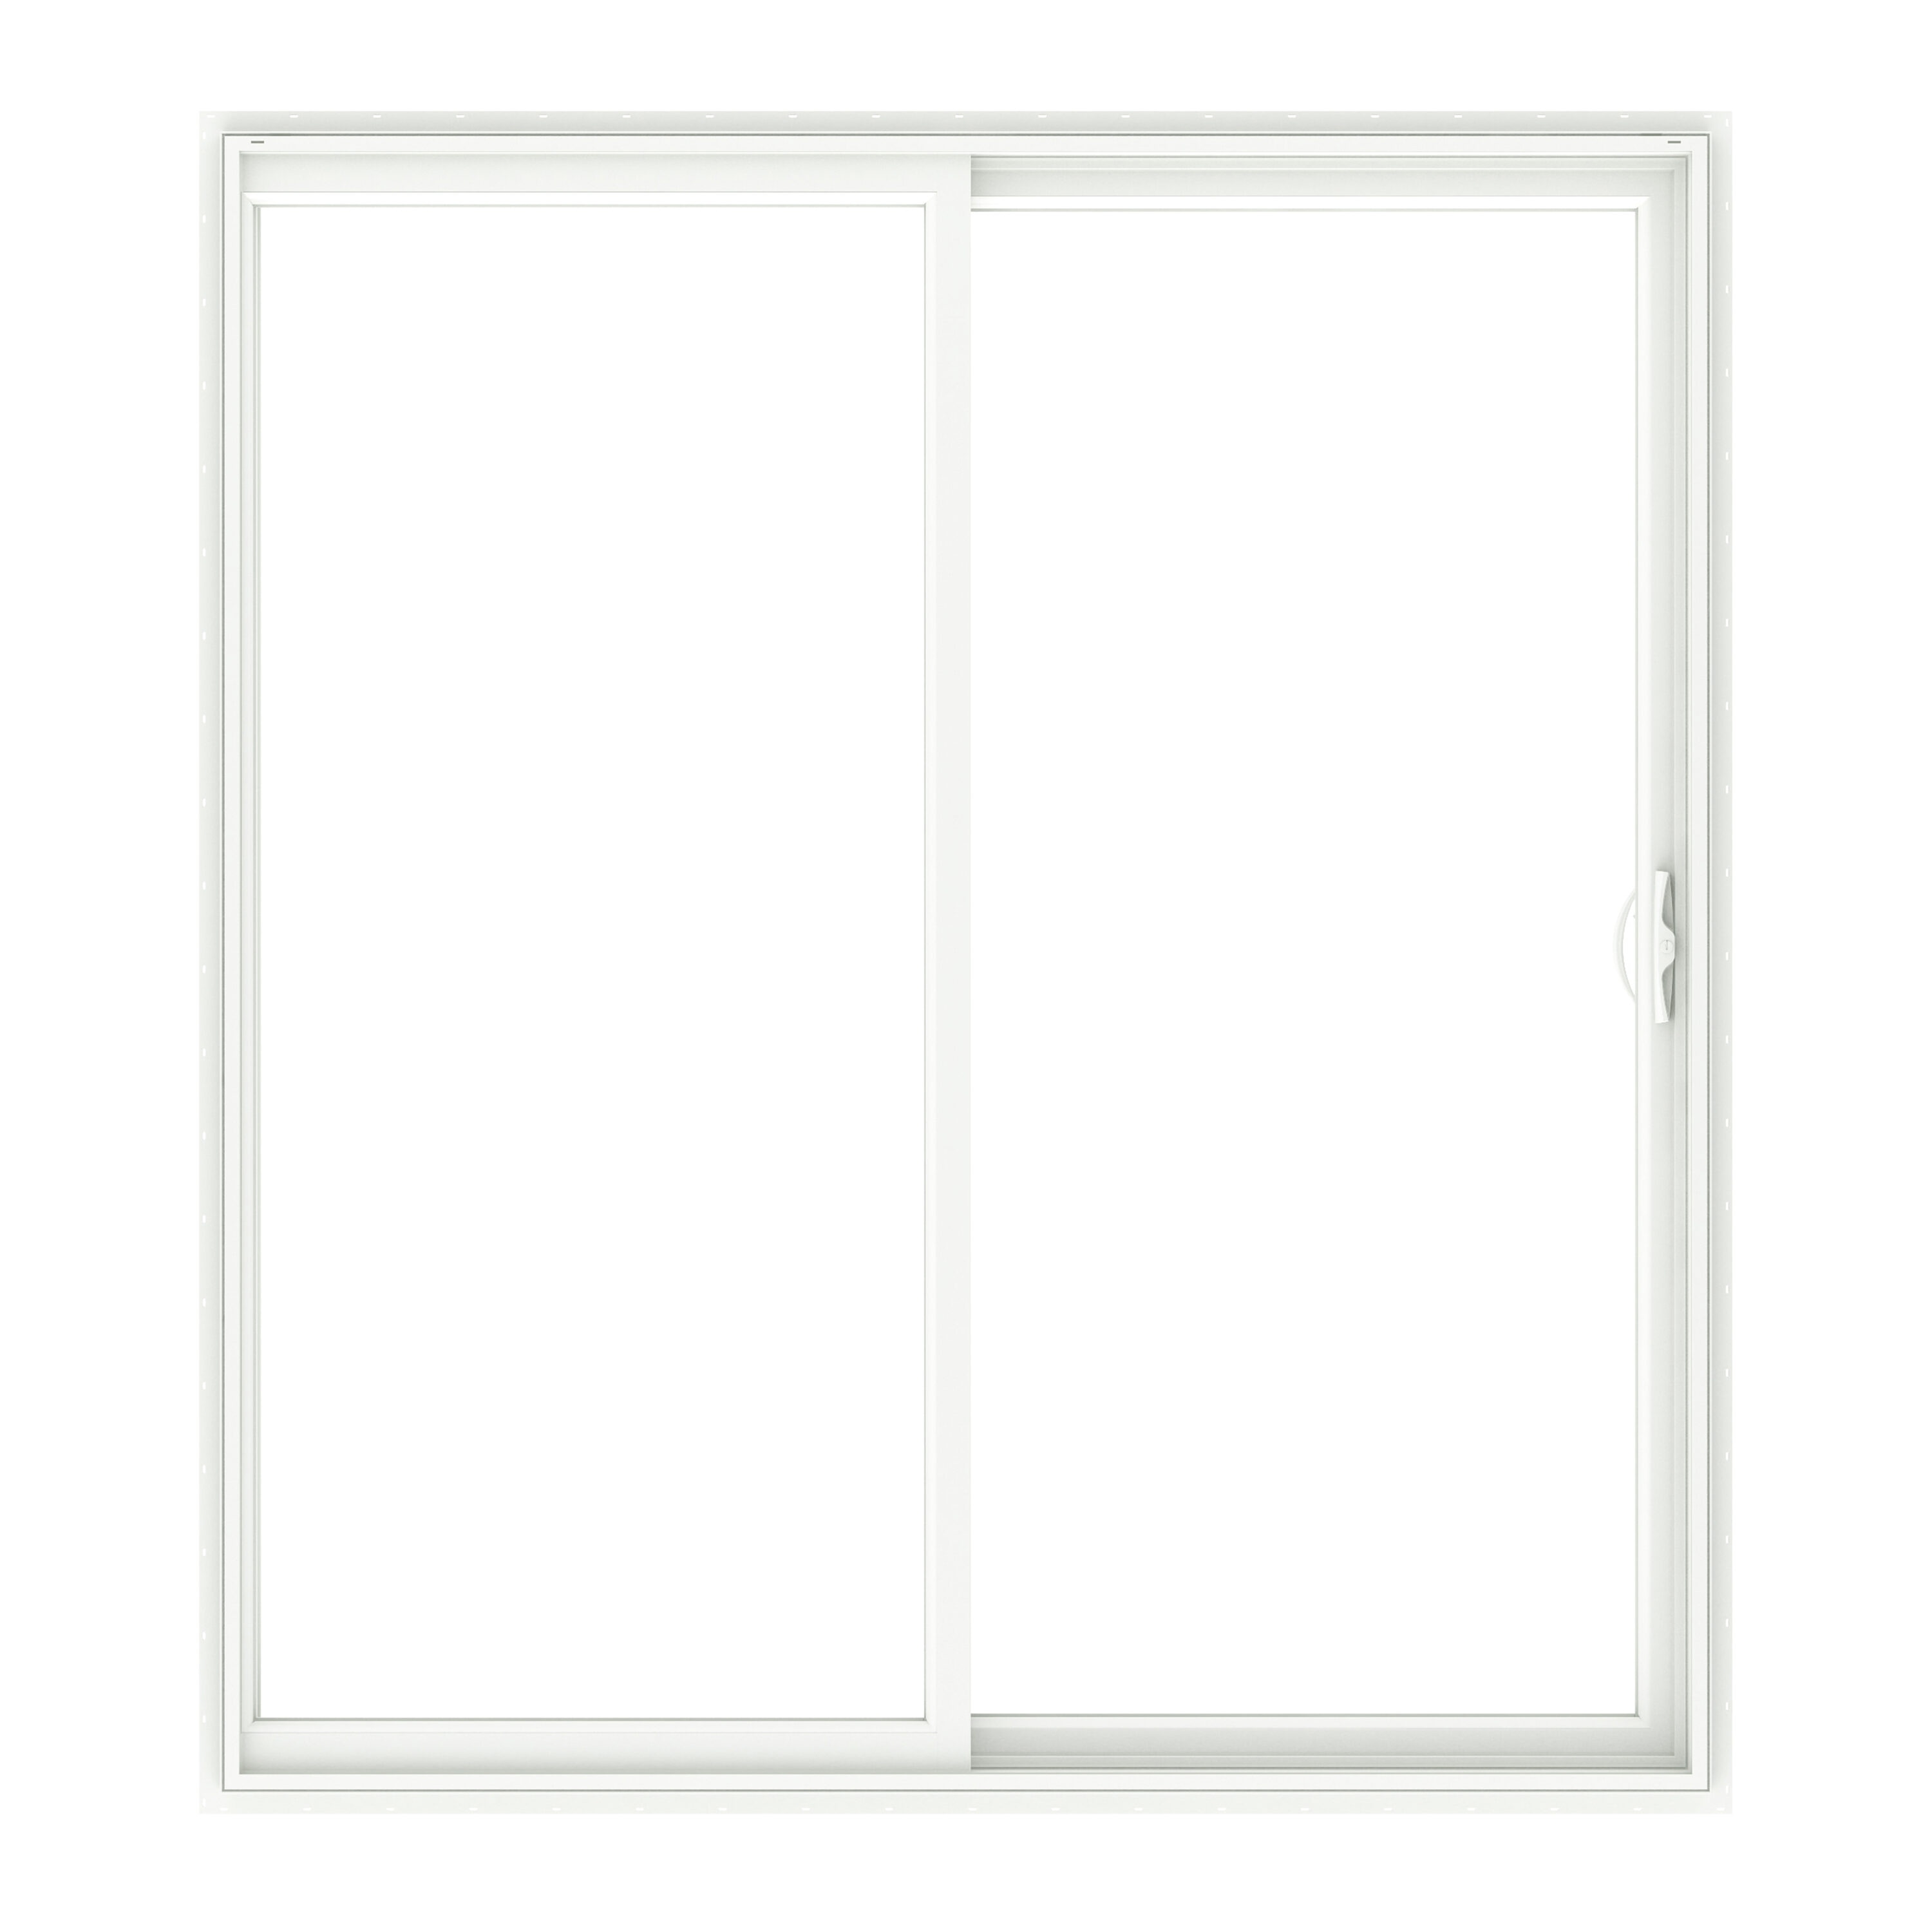 150 Series 96-in x 80-in Low-e Argon White Vinyl Sliding Universal Double Patio Door | - Pella 1000010012